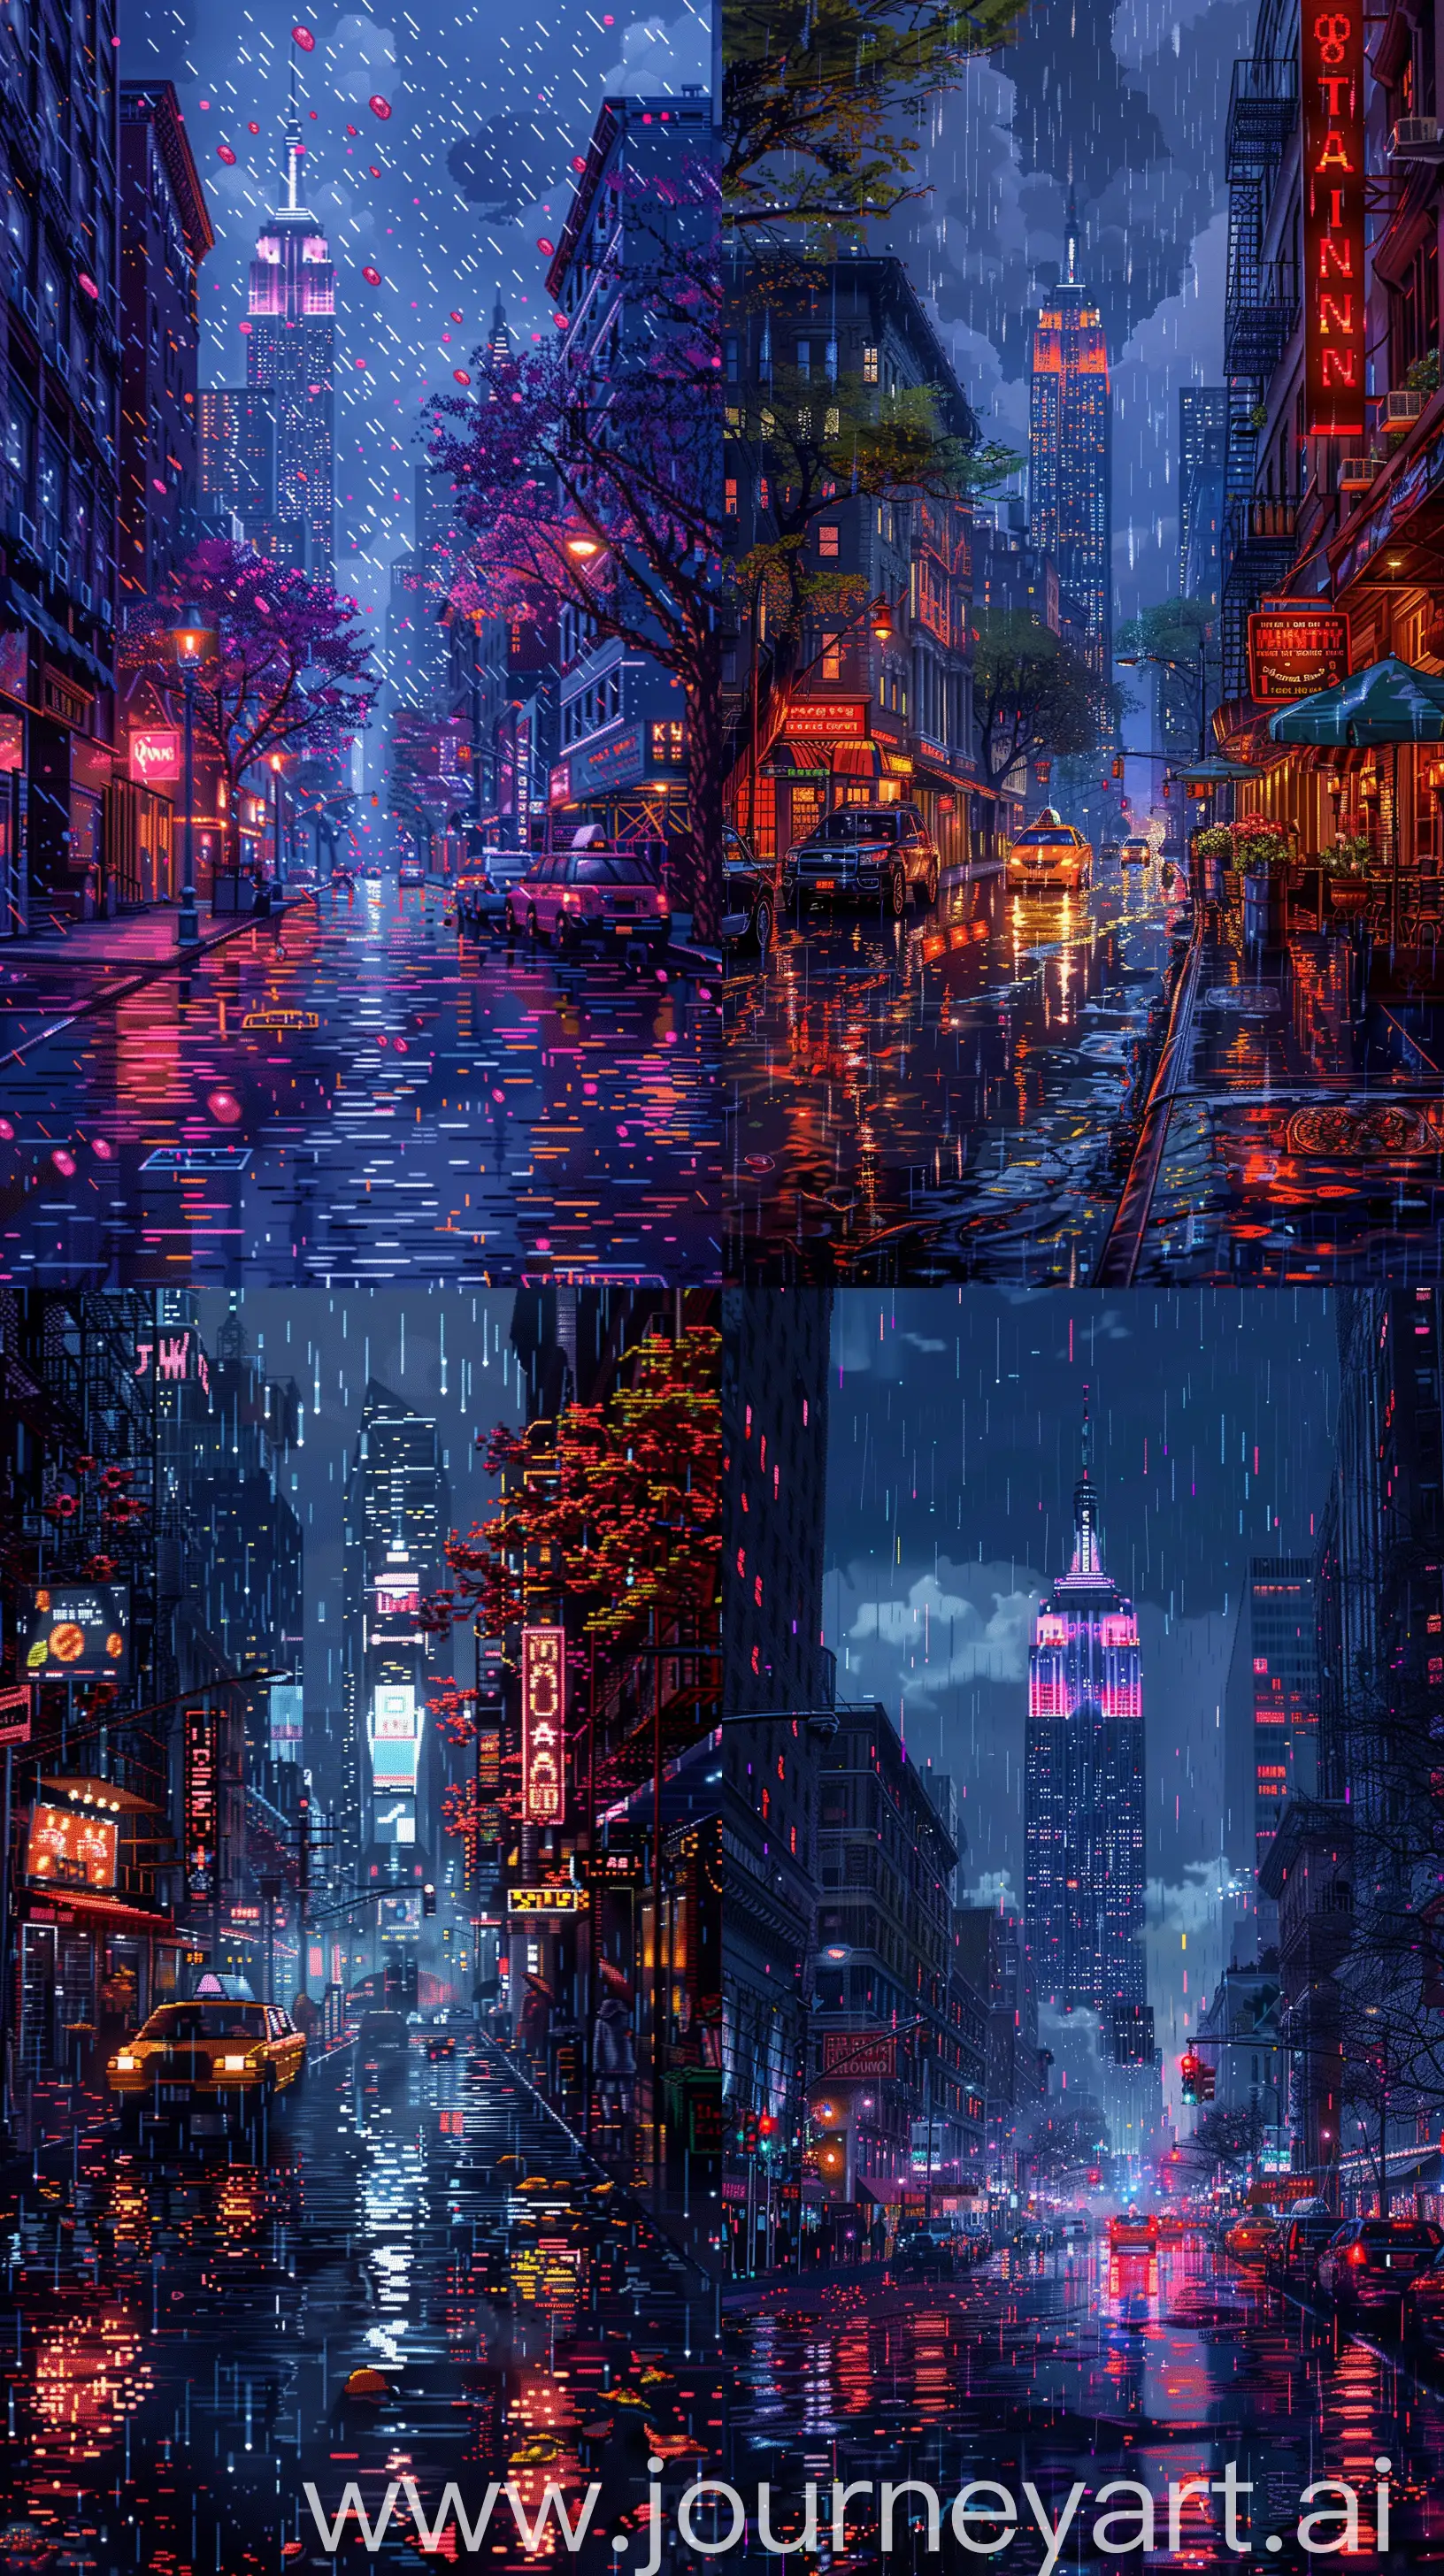 Rainy-Night-in-New-York-City-8bit-Pixel-Art-Street-Scene-with-Deep-Mood-and-Dark-Theme